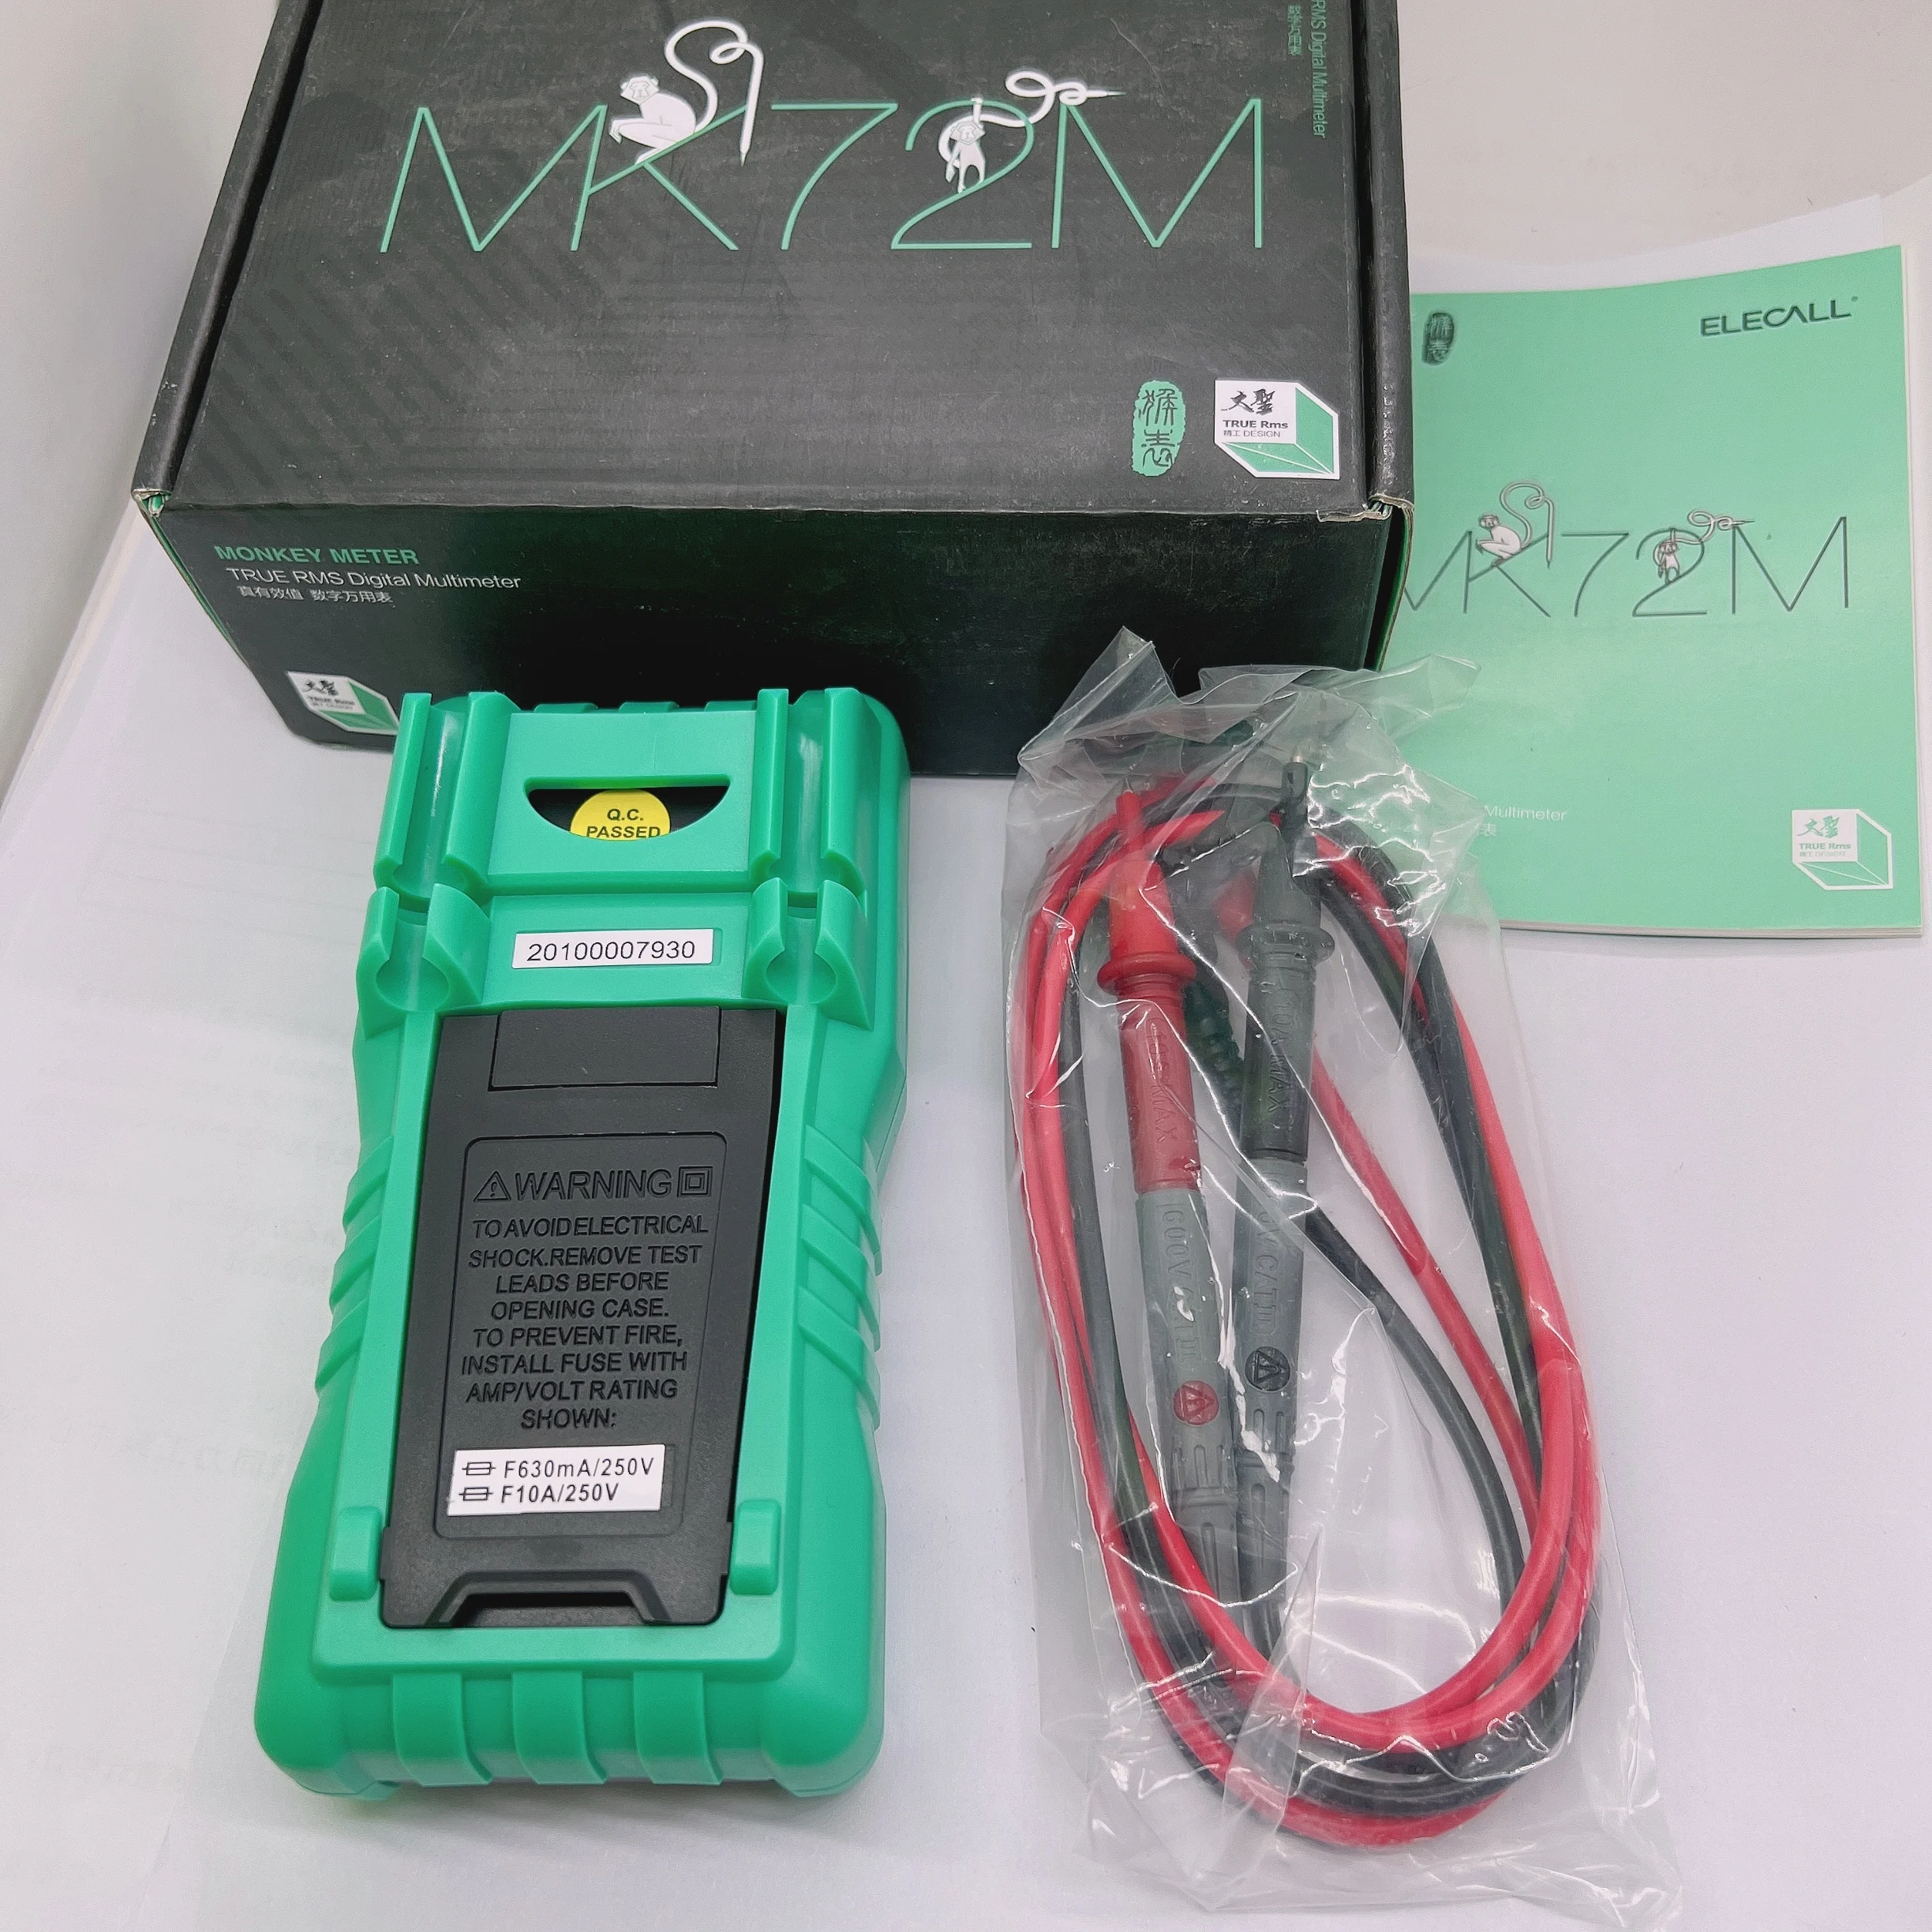 MK72M High - Precision True RMS Digital Multimeter Handheld Multimeter With Temperature Capacitance LCD Backlight